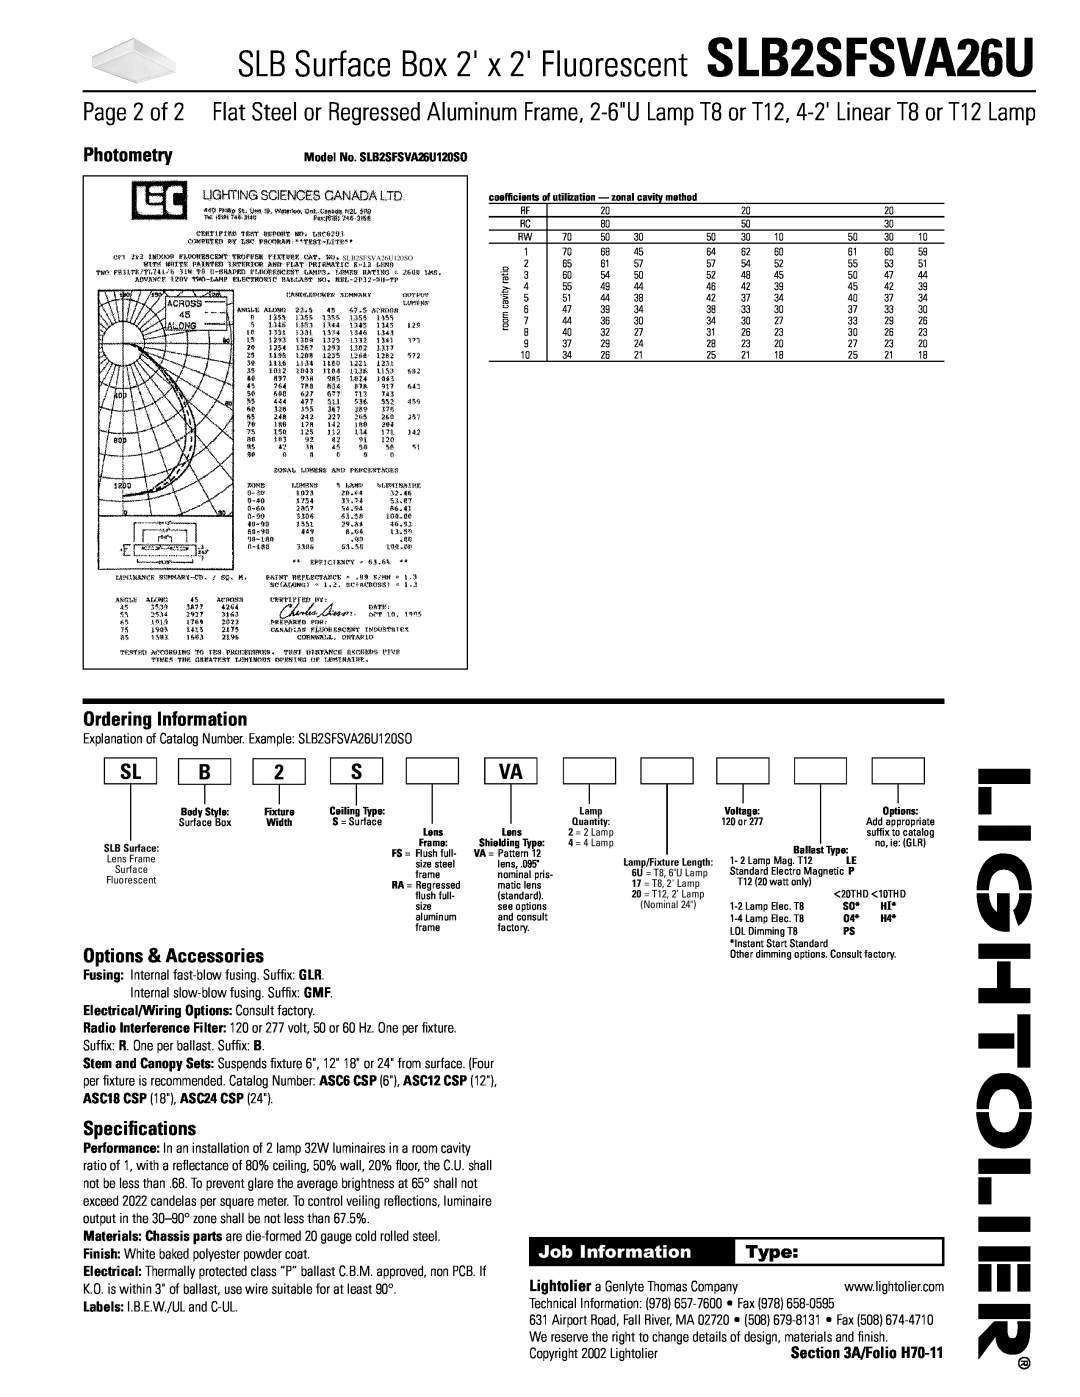 Lightolier SLB2SFSVA26U Photometry, Ordering Information, Options & Accessories, Speciﬁcations, Job Information, Type 